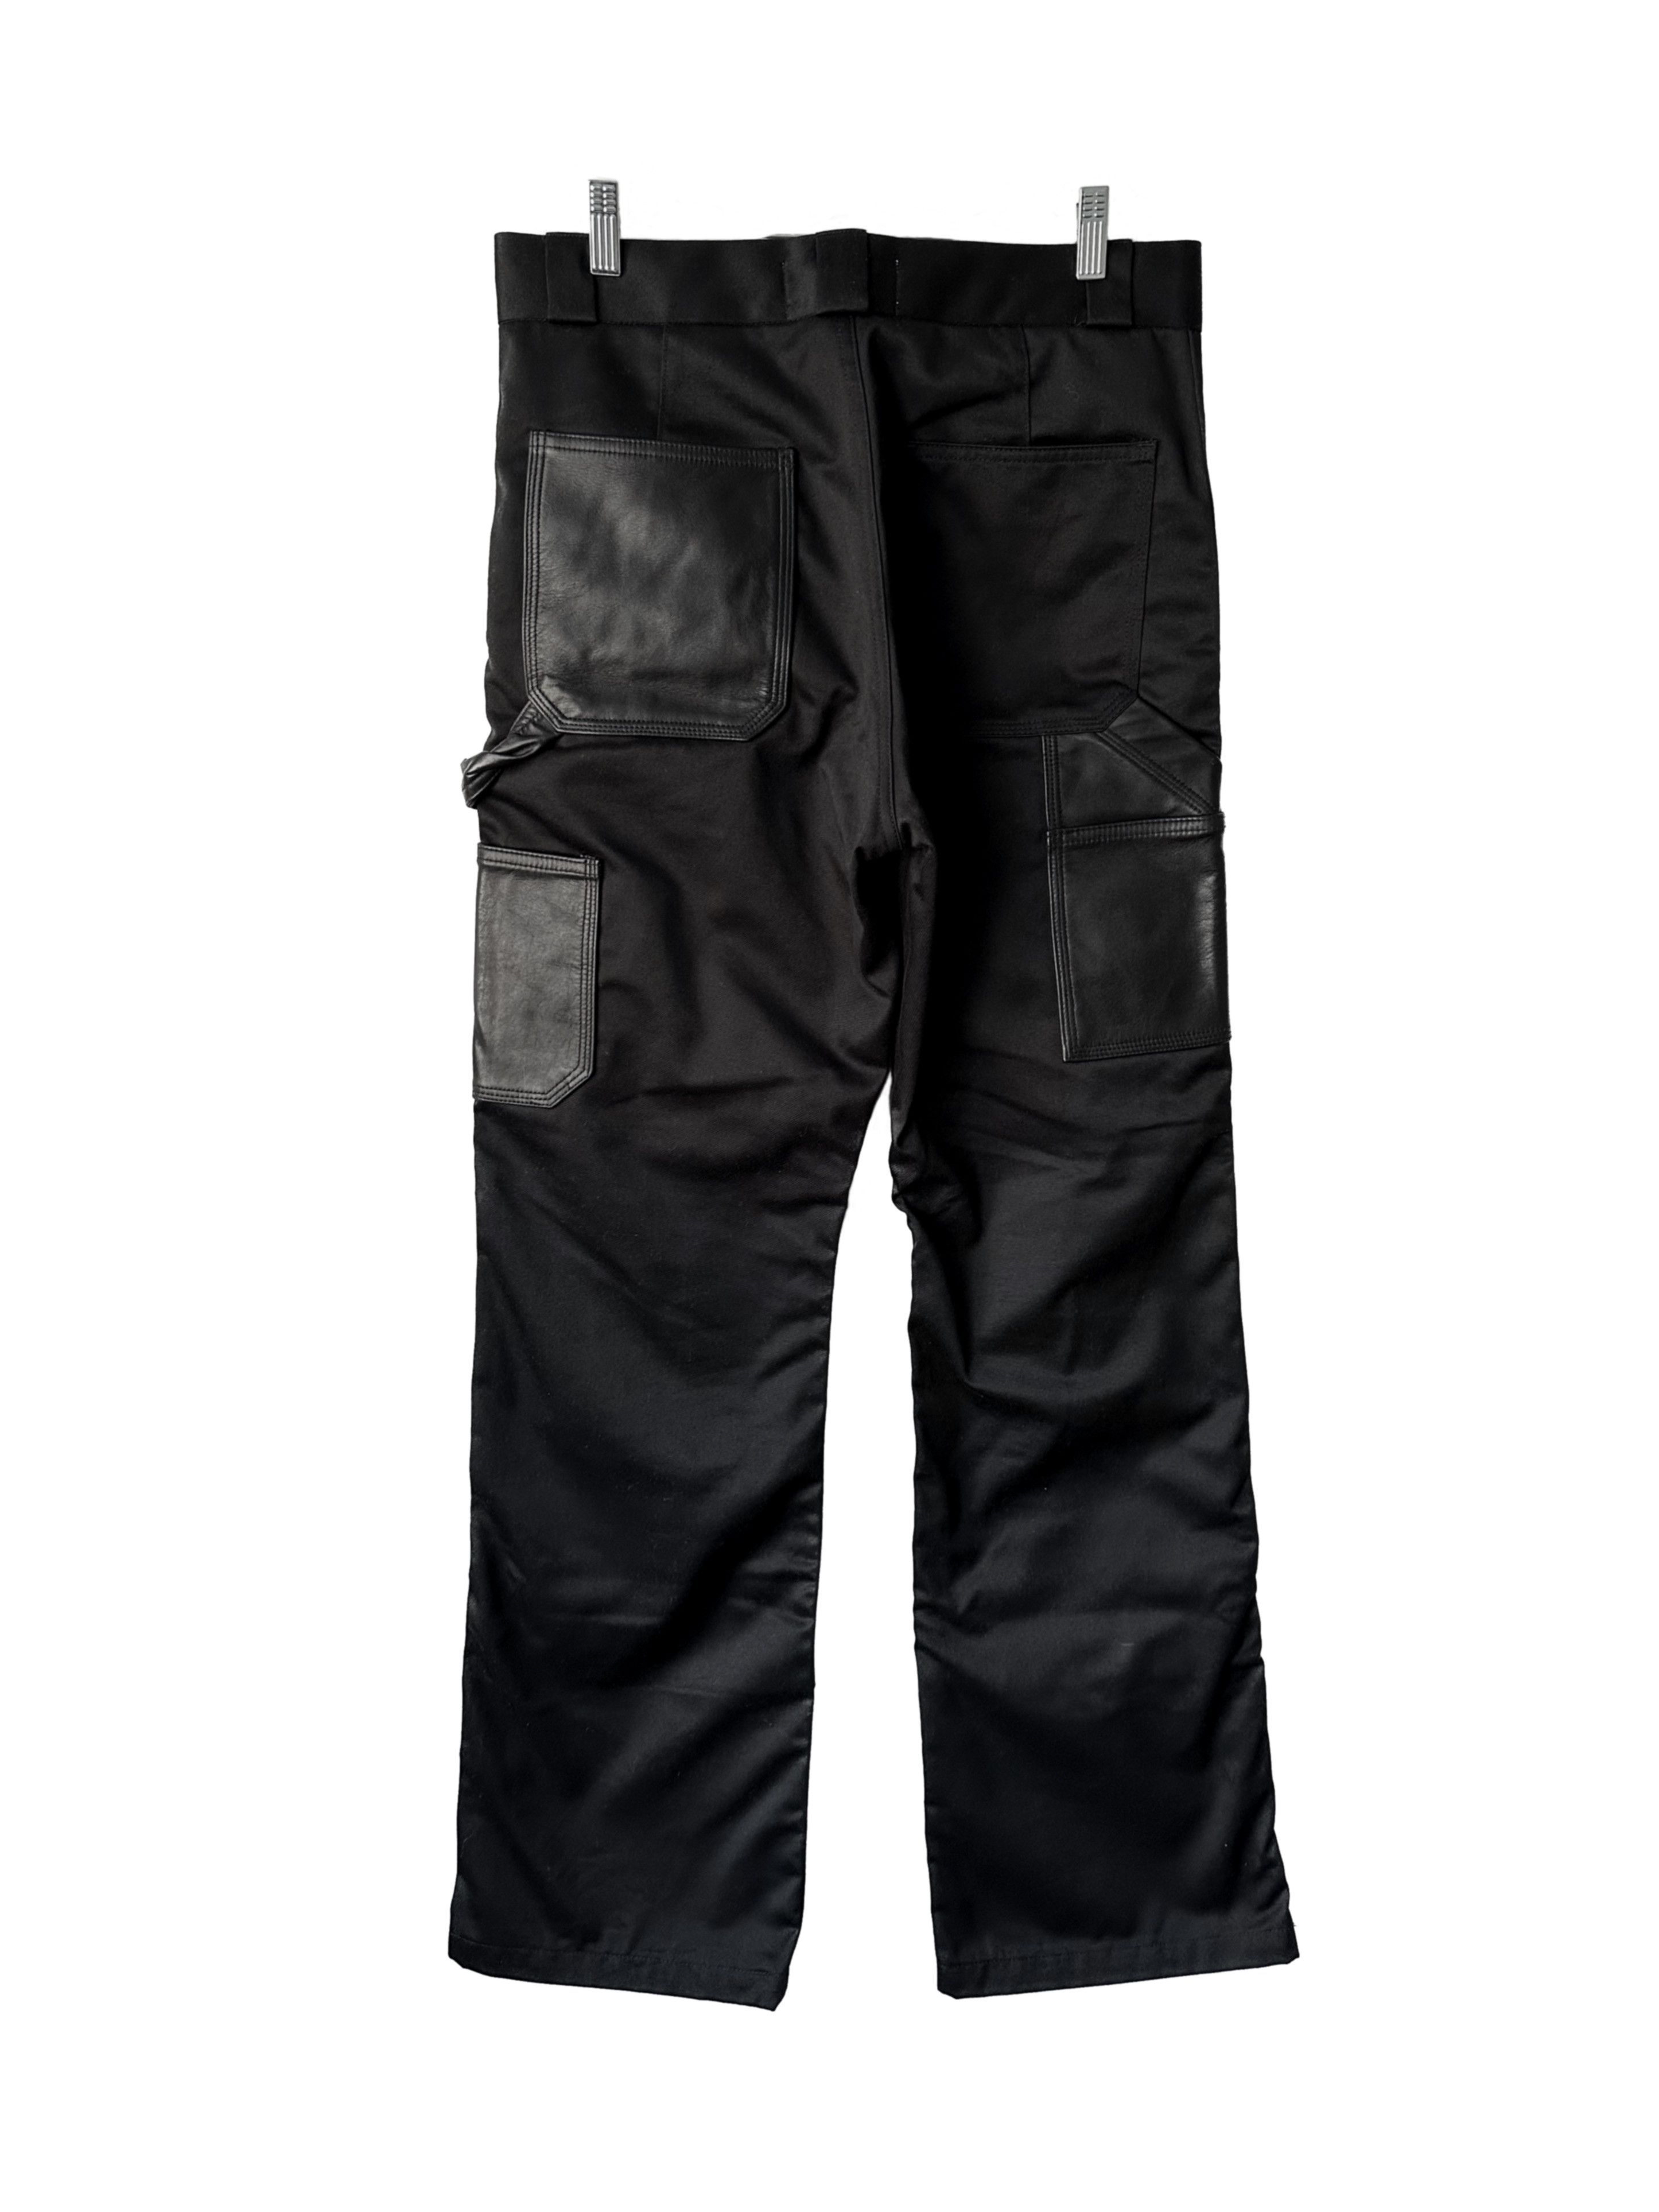 Vuja de adagio leather trousers size2 - ワークパンツ/カーゴパンツ